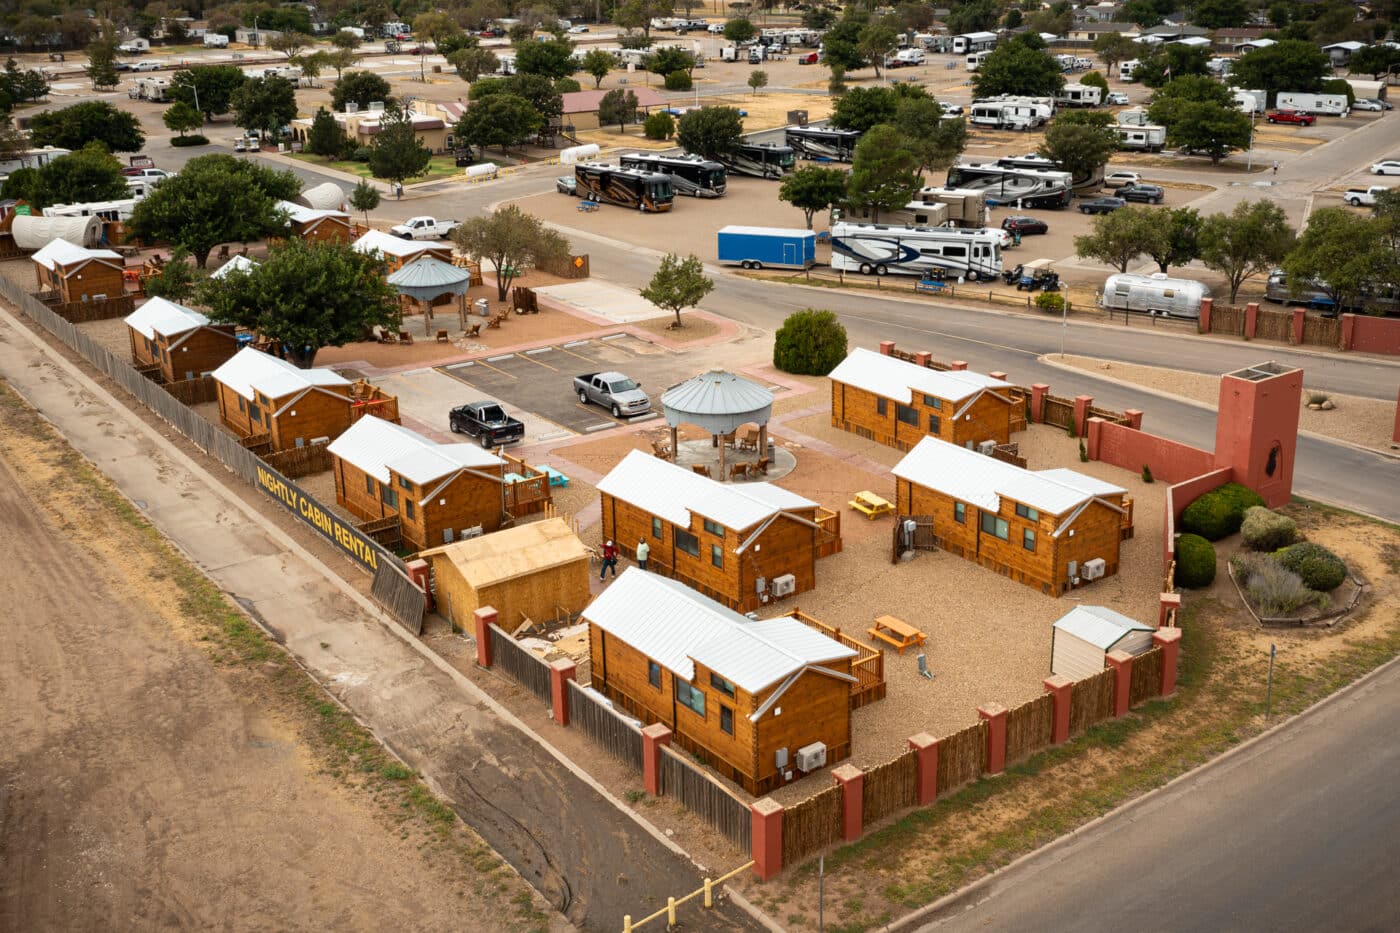 11 park model cabins in Amarillo Texas